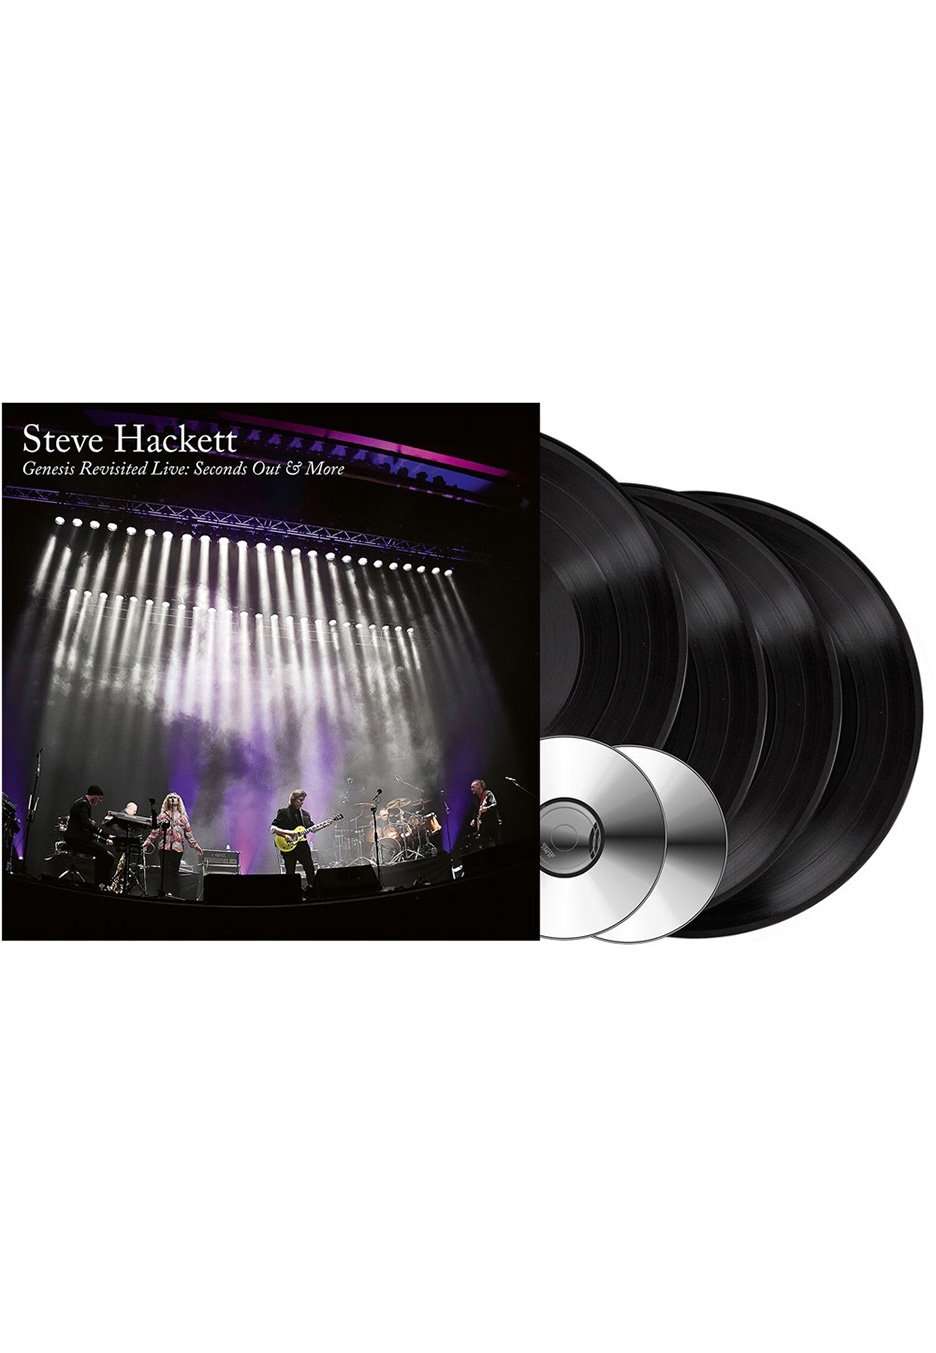 Steve Hackett - Genesis Revisited Live: Seconds Out & More - 4 Vinyl + 2 CD